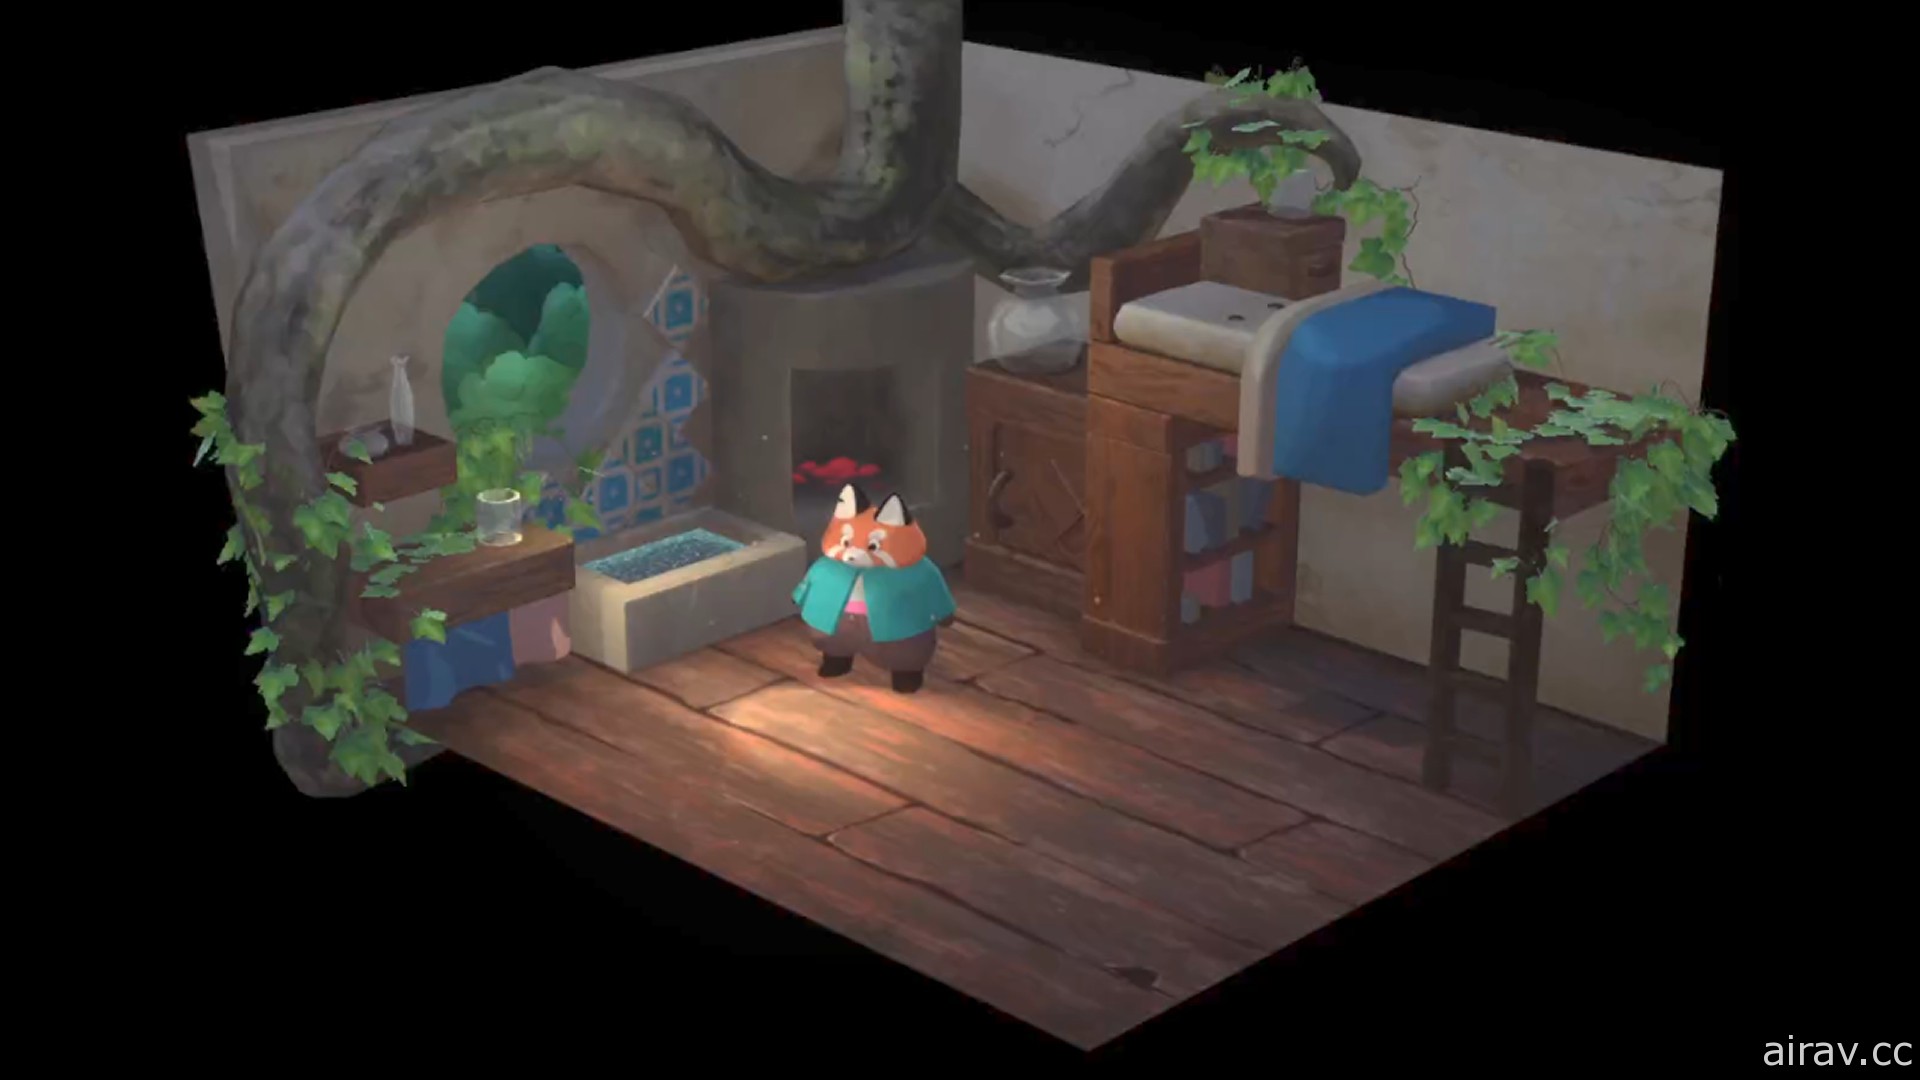 NEOWIZ 宣布將發行治癒探險遊戲《Aka》 與可愛角色在島嶼探險